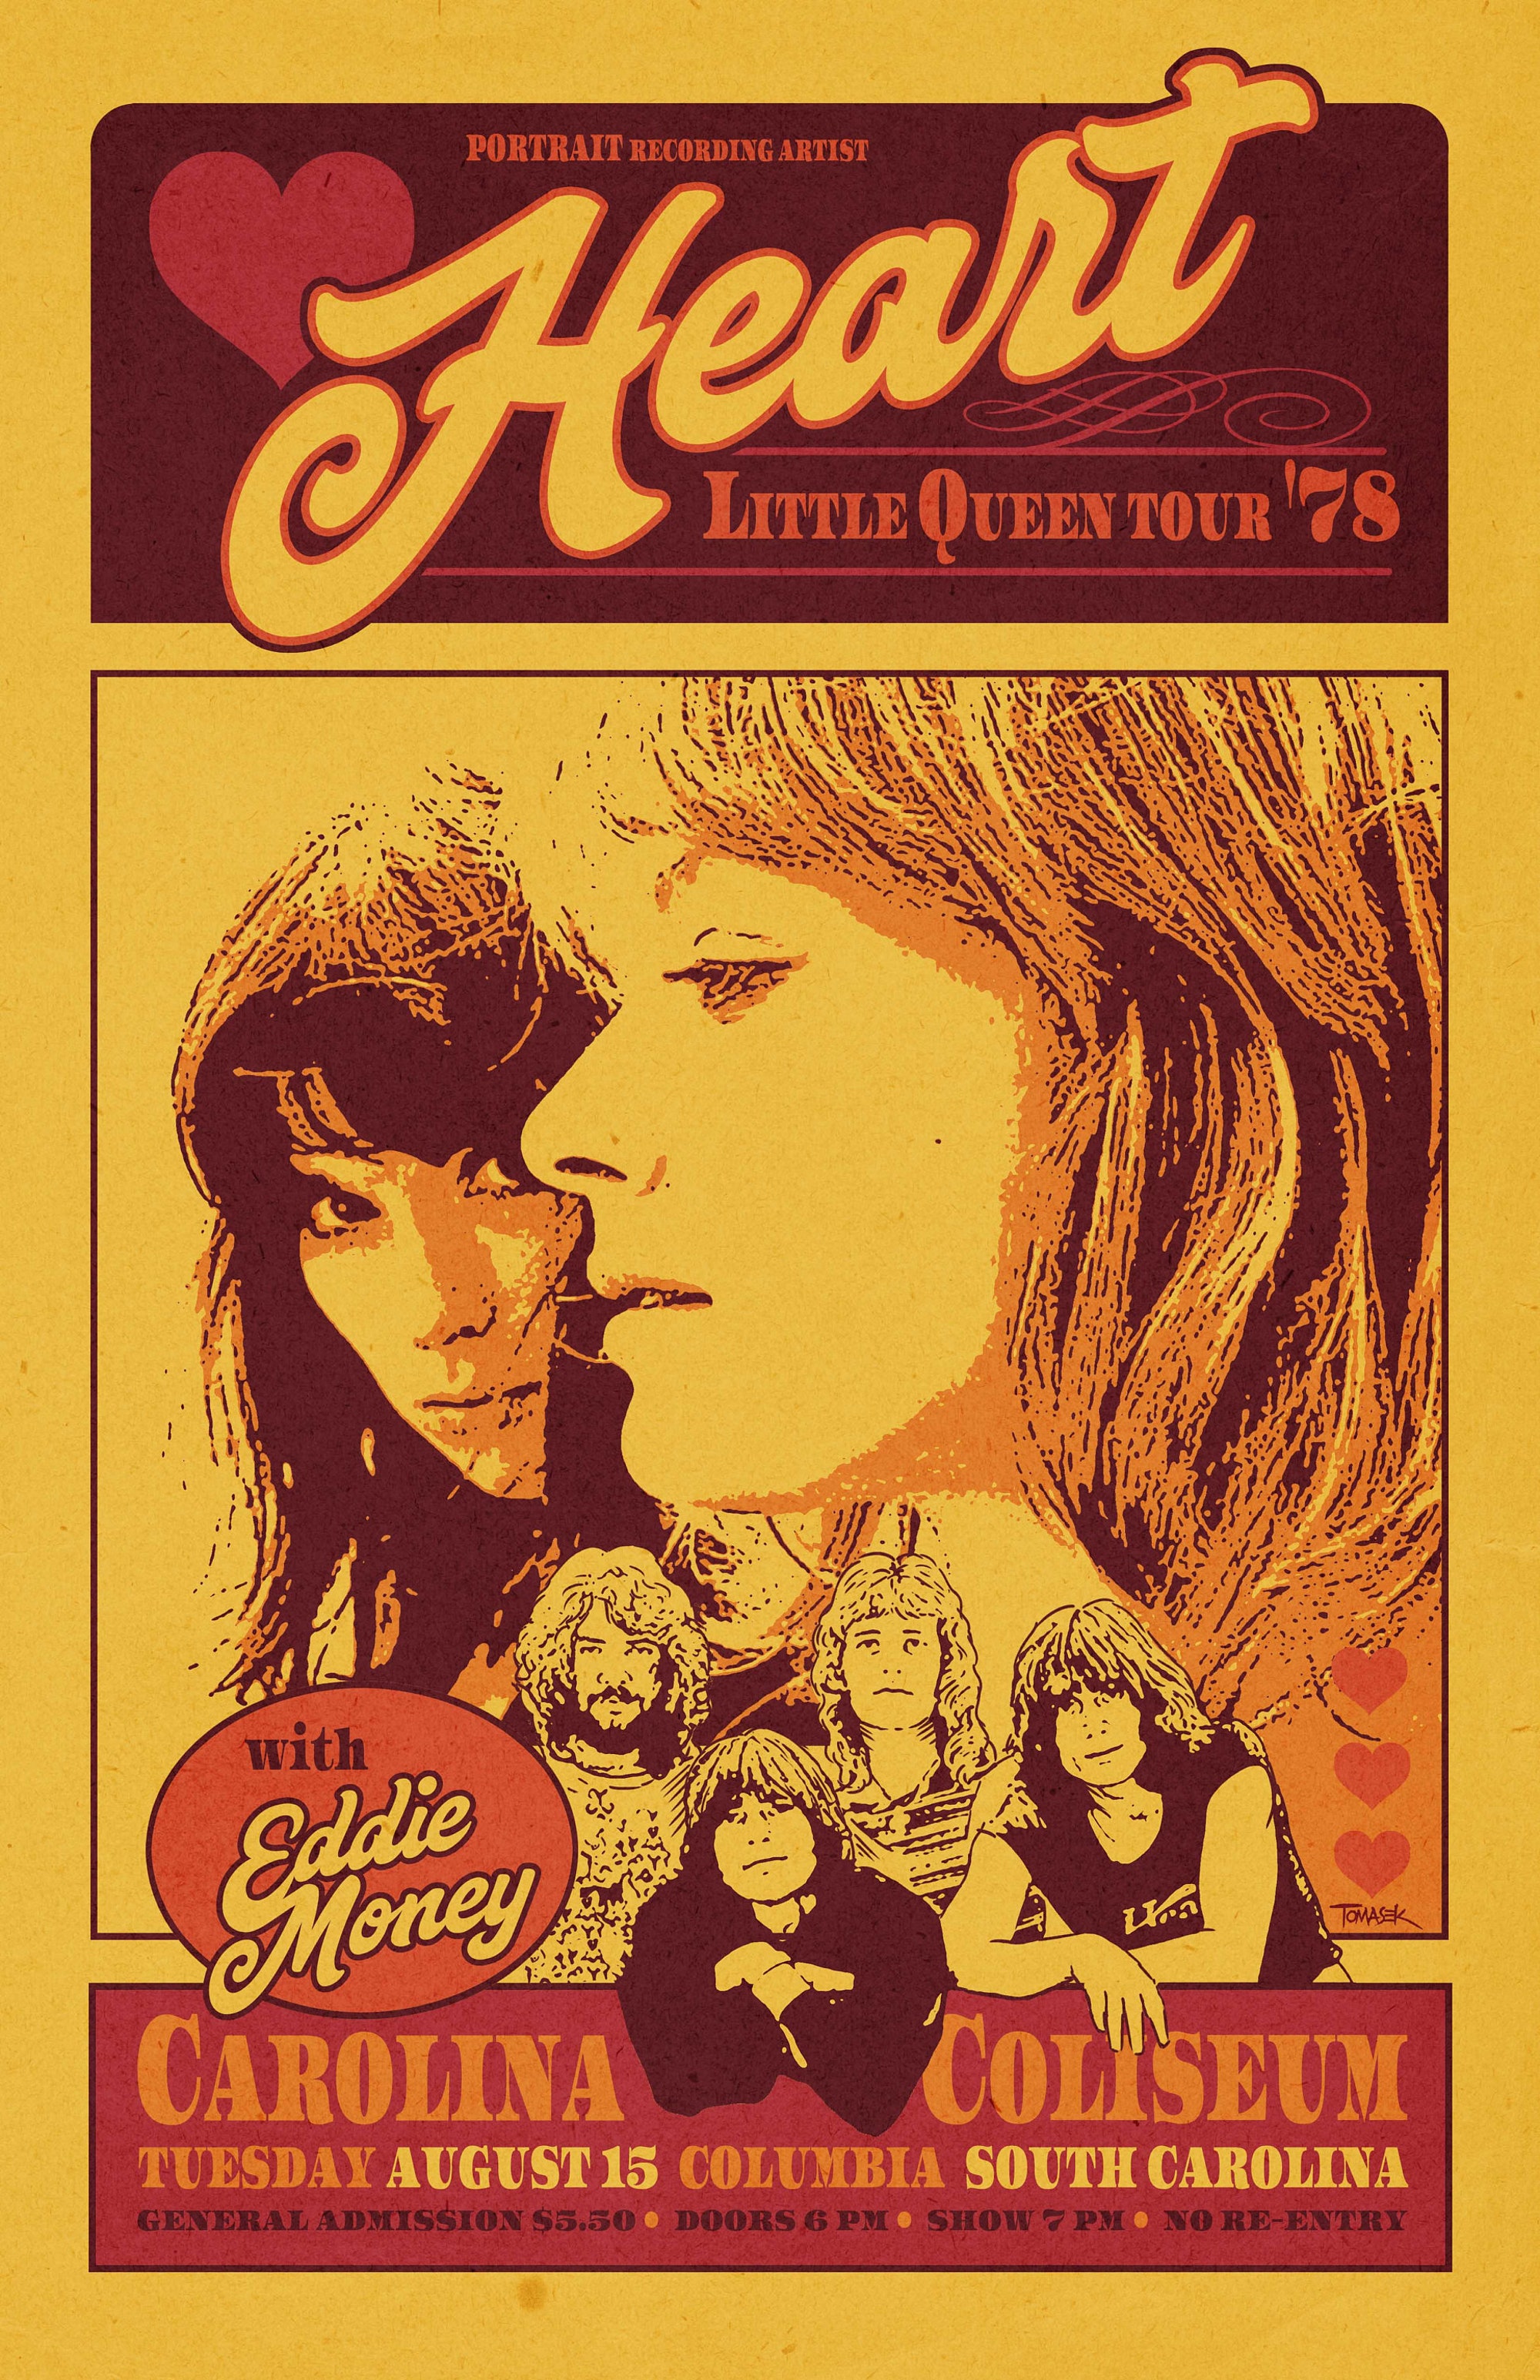 Heart 1978 tour poster